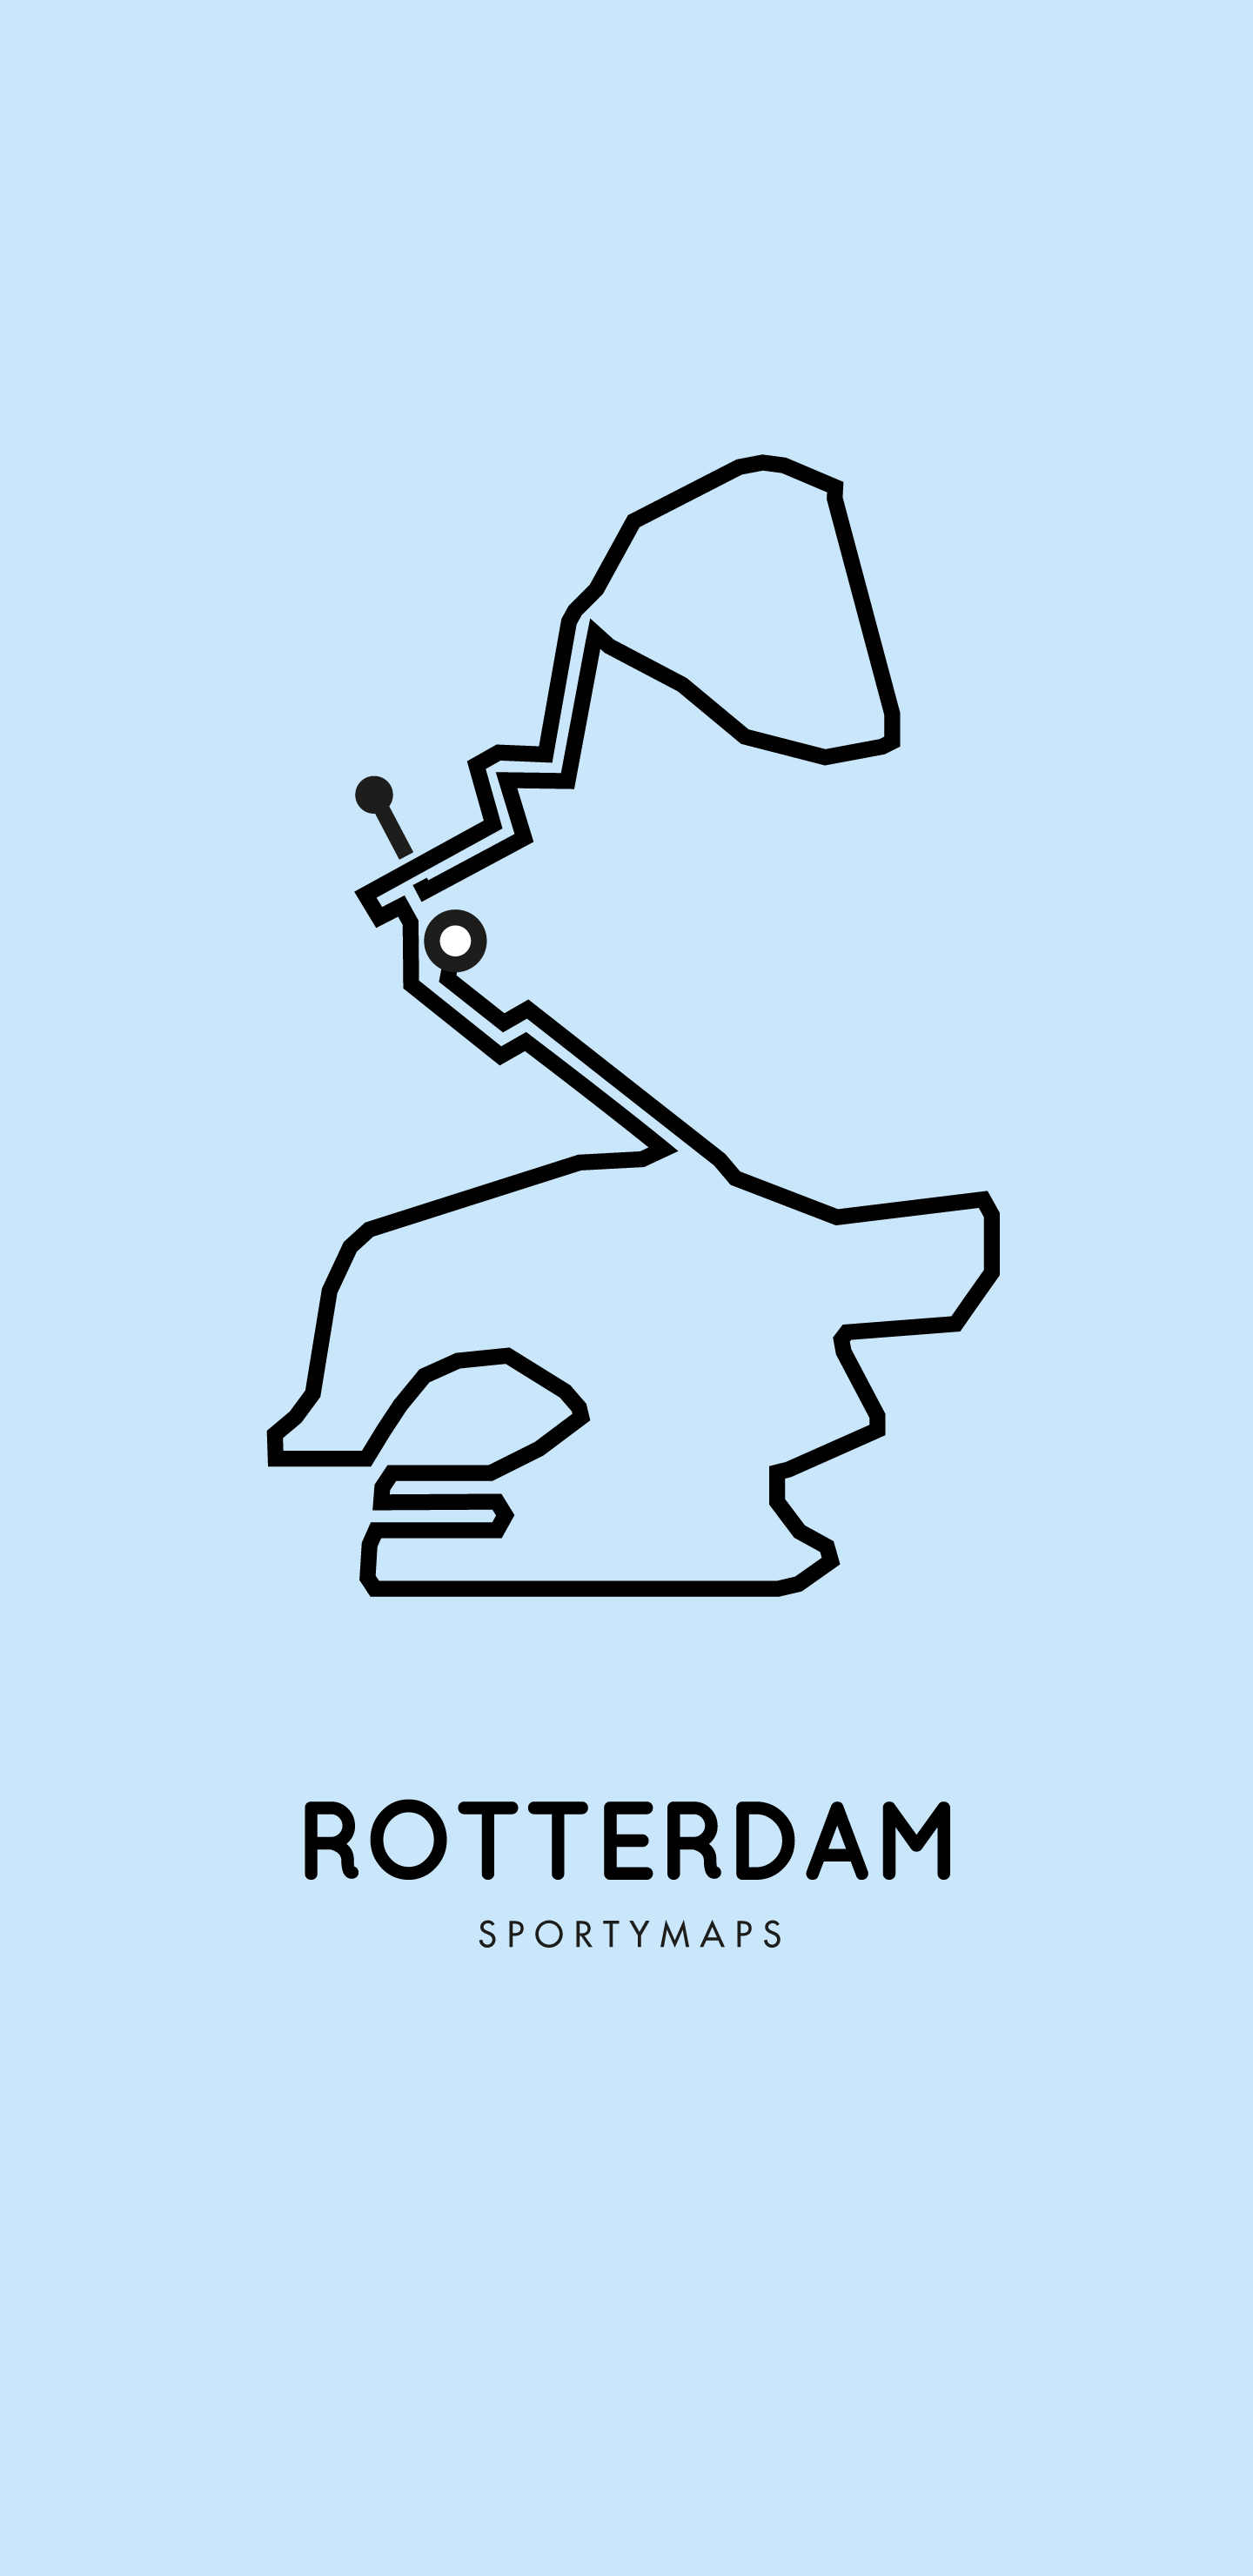 Sportymaps-Rotterdam-marathon-blue